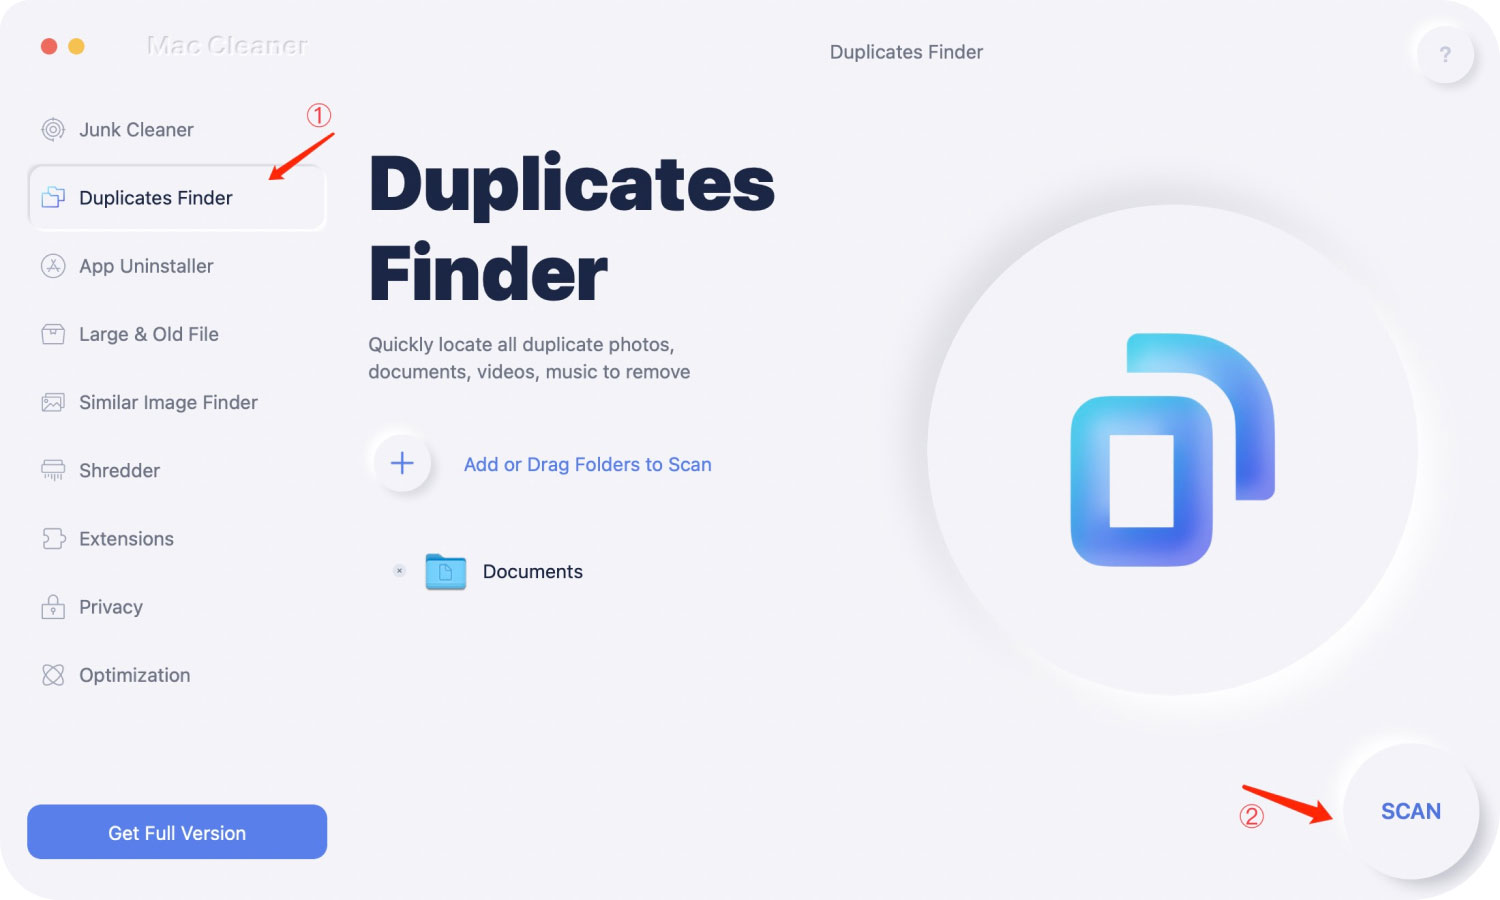 Select Duplicates Finder